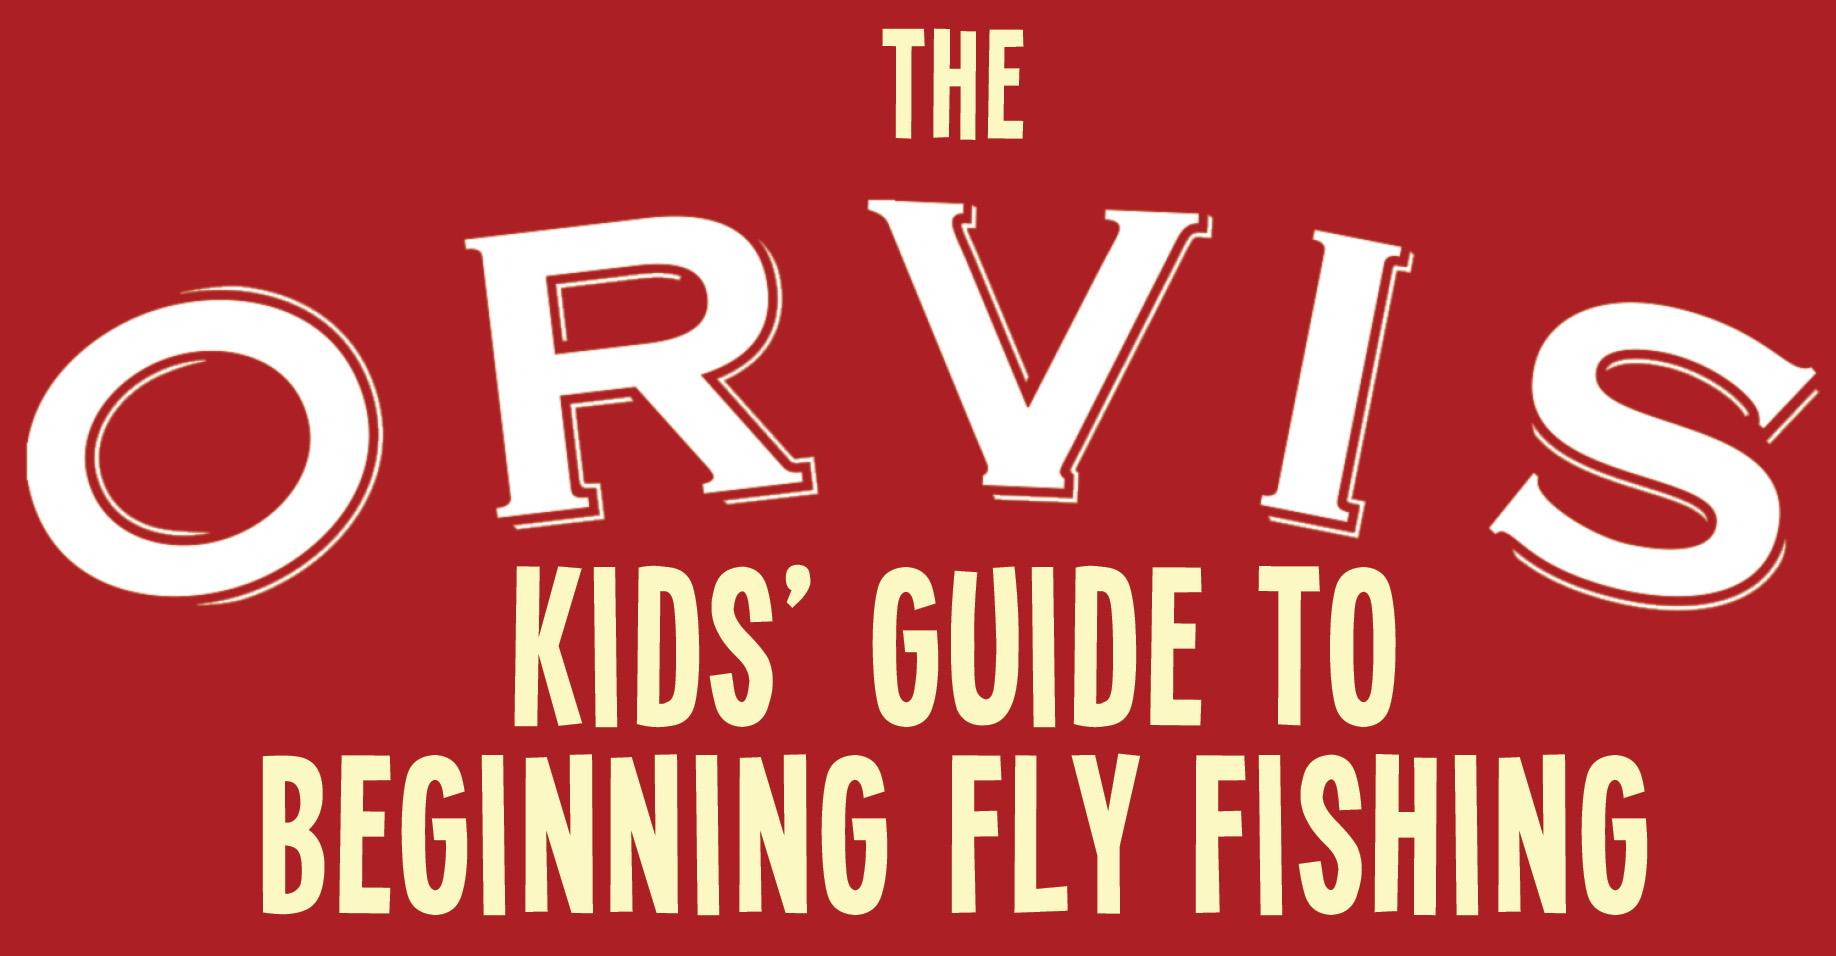 Orvis Kids' Guide to Beginning Fly Fishing - Florida Sportsman